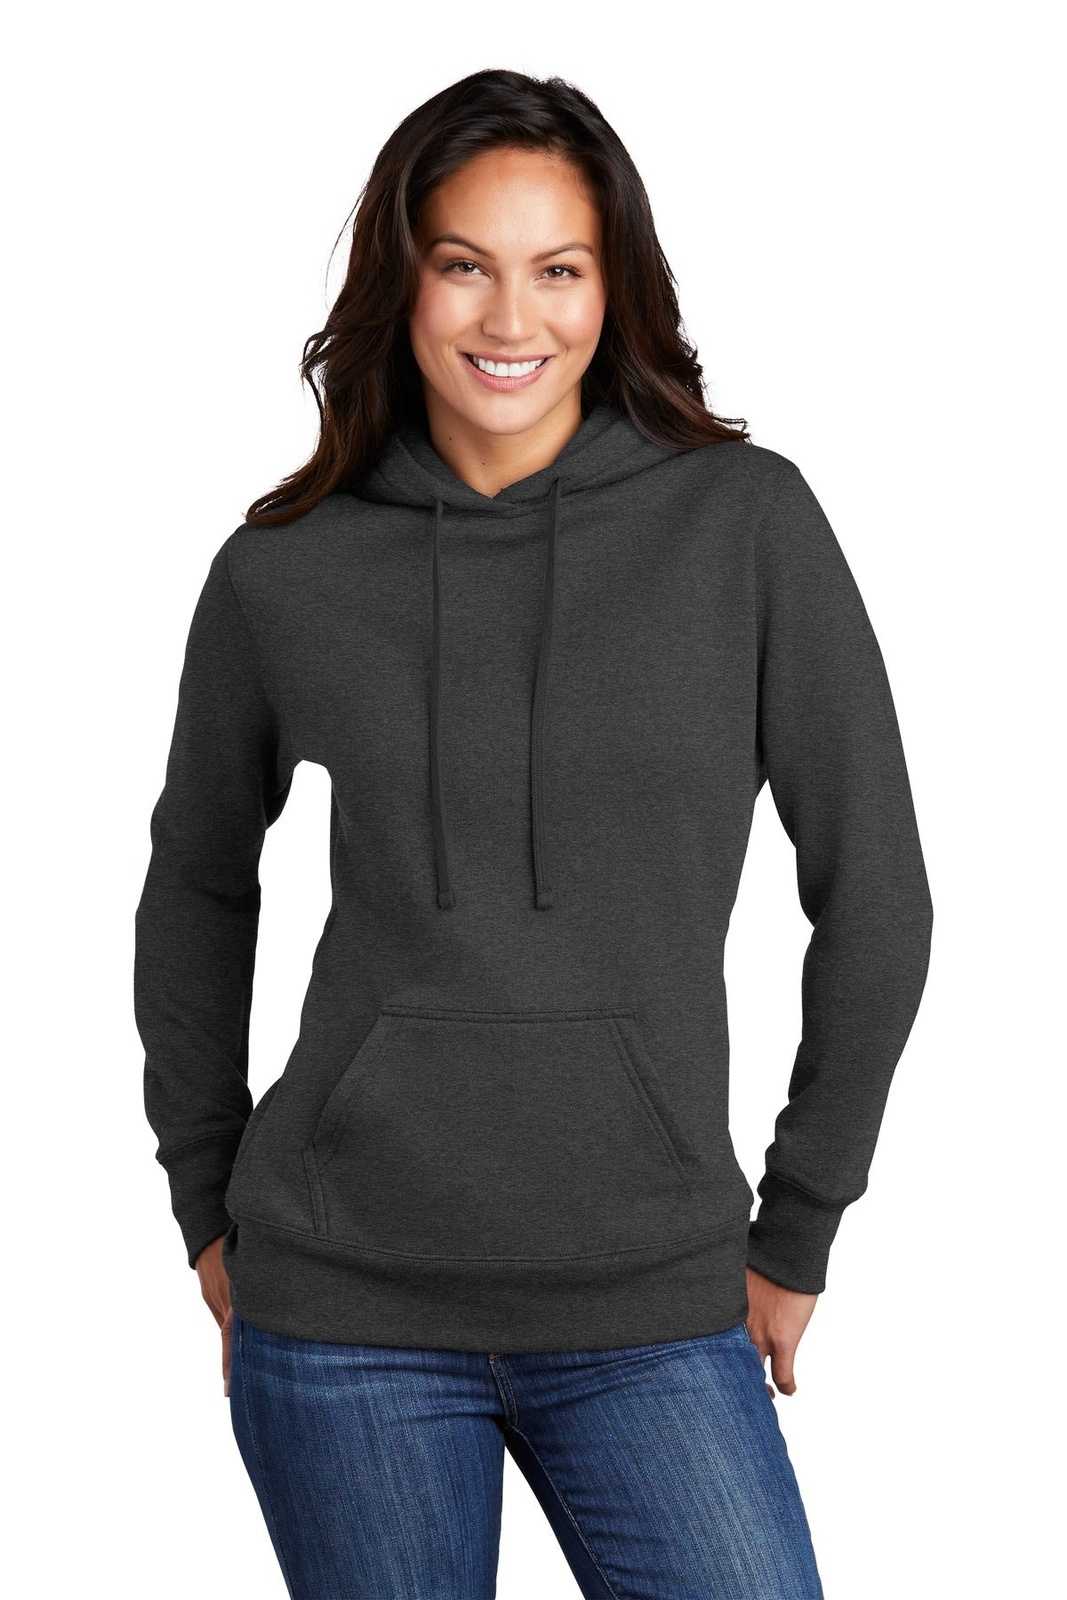 Port & Company LPC78H Ladies Core Fleece Pullover Hooded Sweatshirt - Dark Heather Gray - HIT a Double - 1